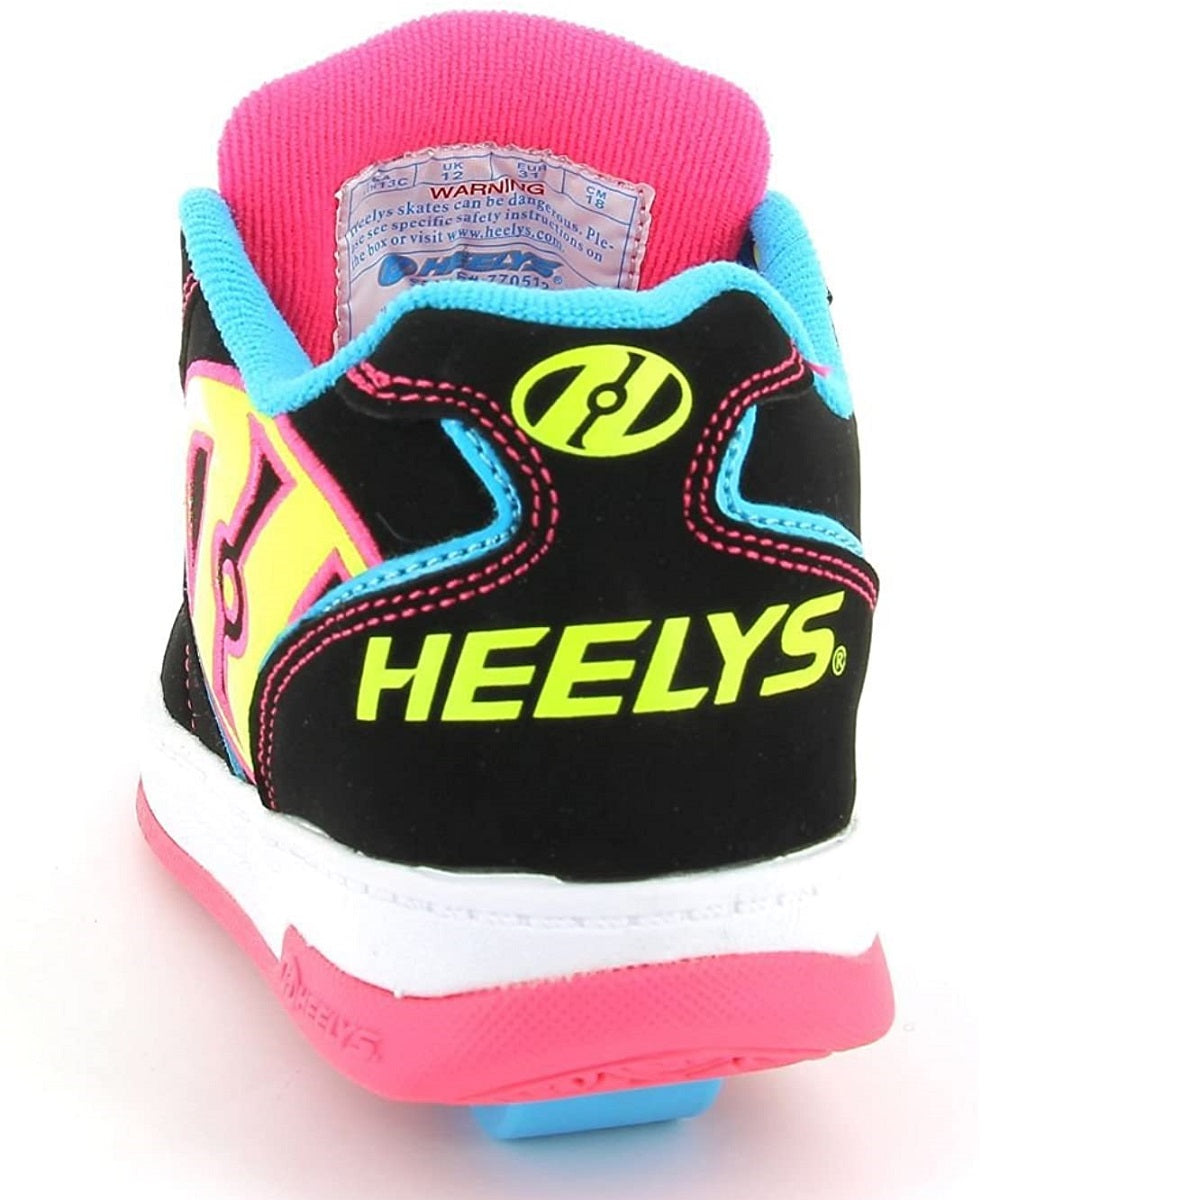 Heelys Propel 2.0 Black/Neon Multi Size UK 6